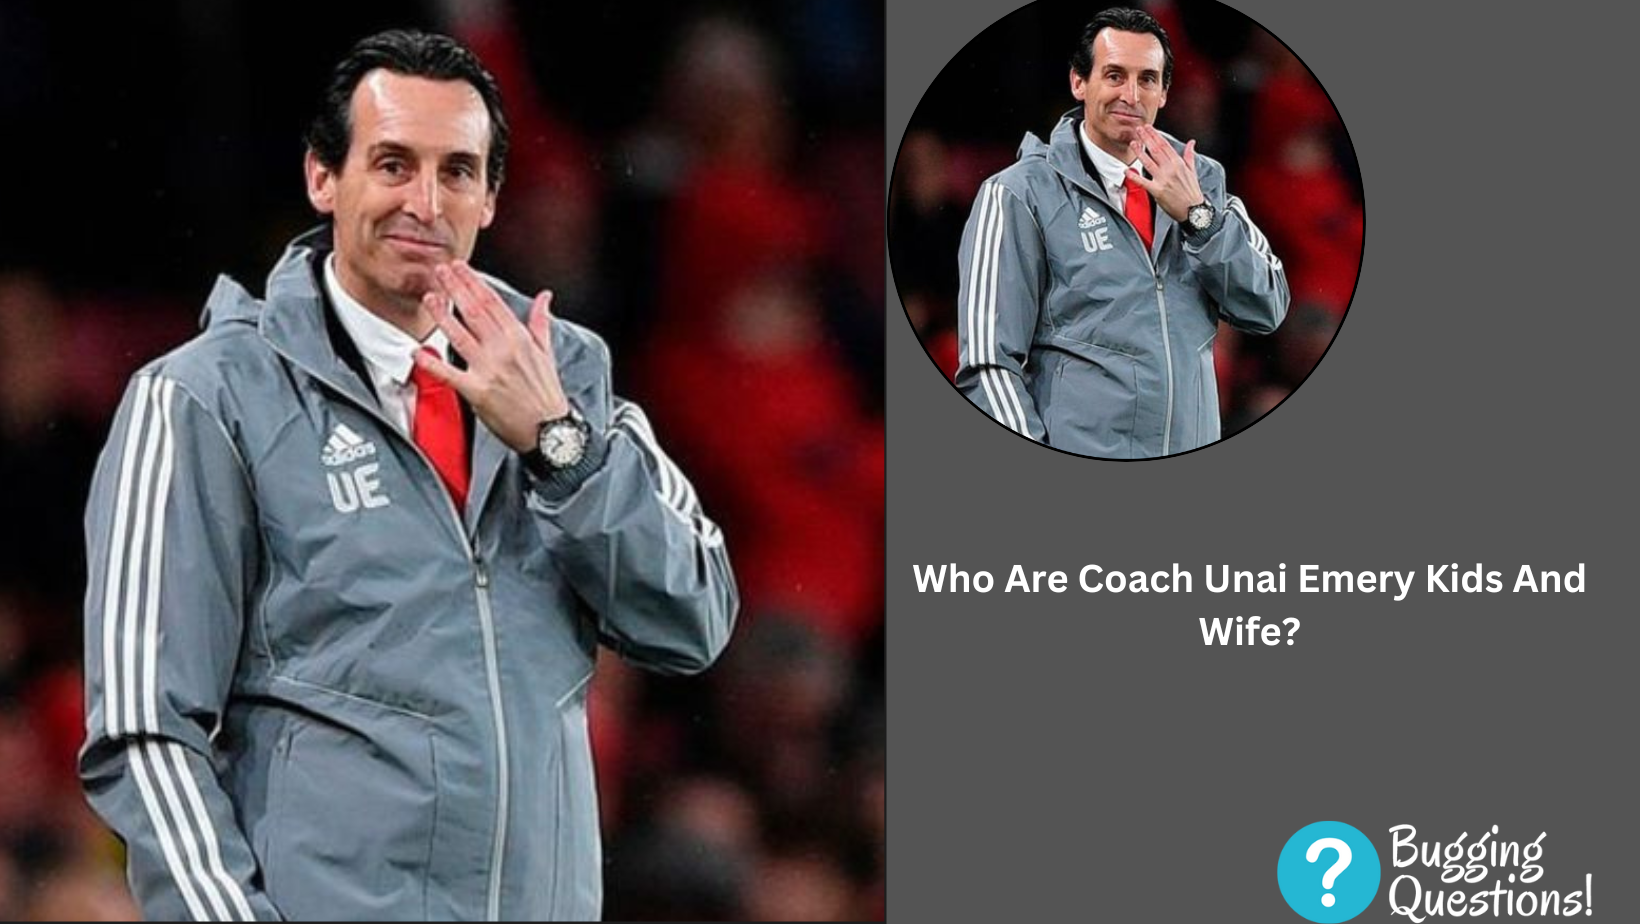 Who Are Coach Unai Emery Kids And Wife?